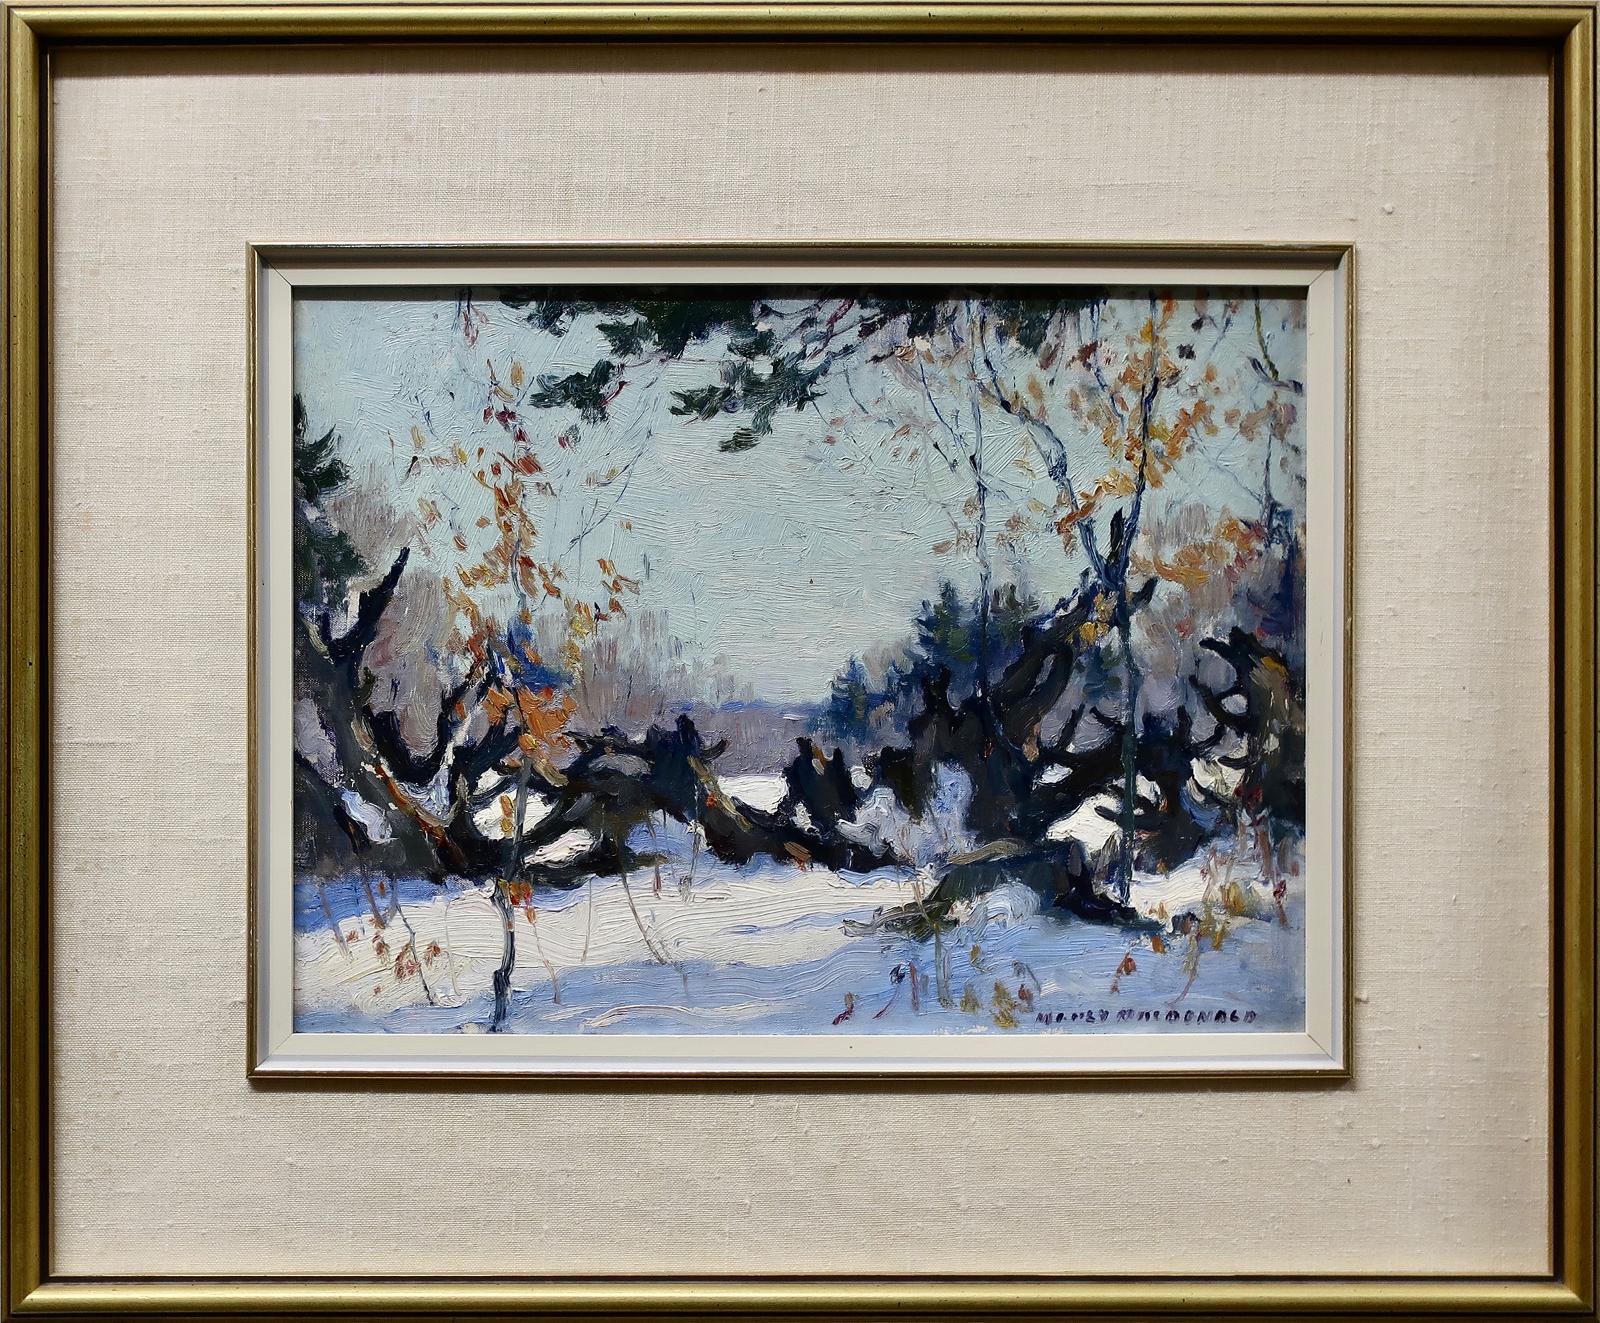 Manly Edward MacDonald (1889-1971) - Untitled (Winter Landscape)